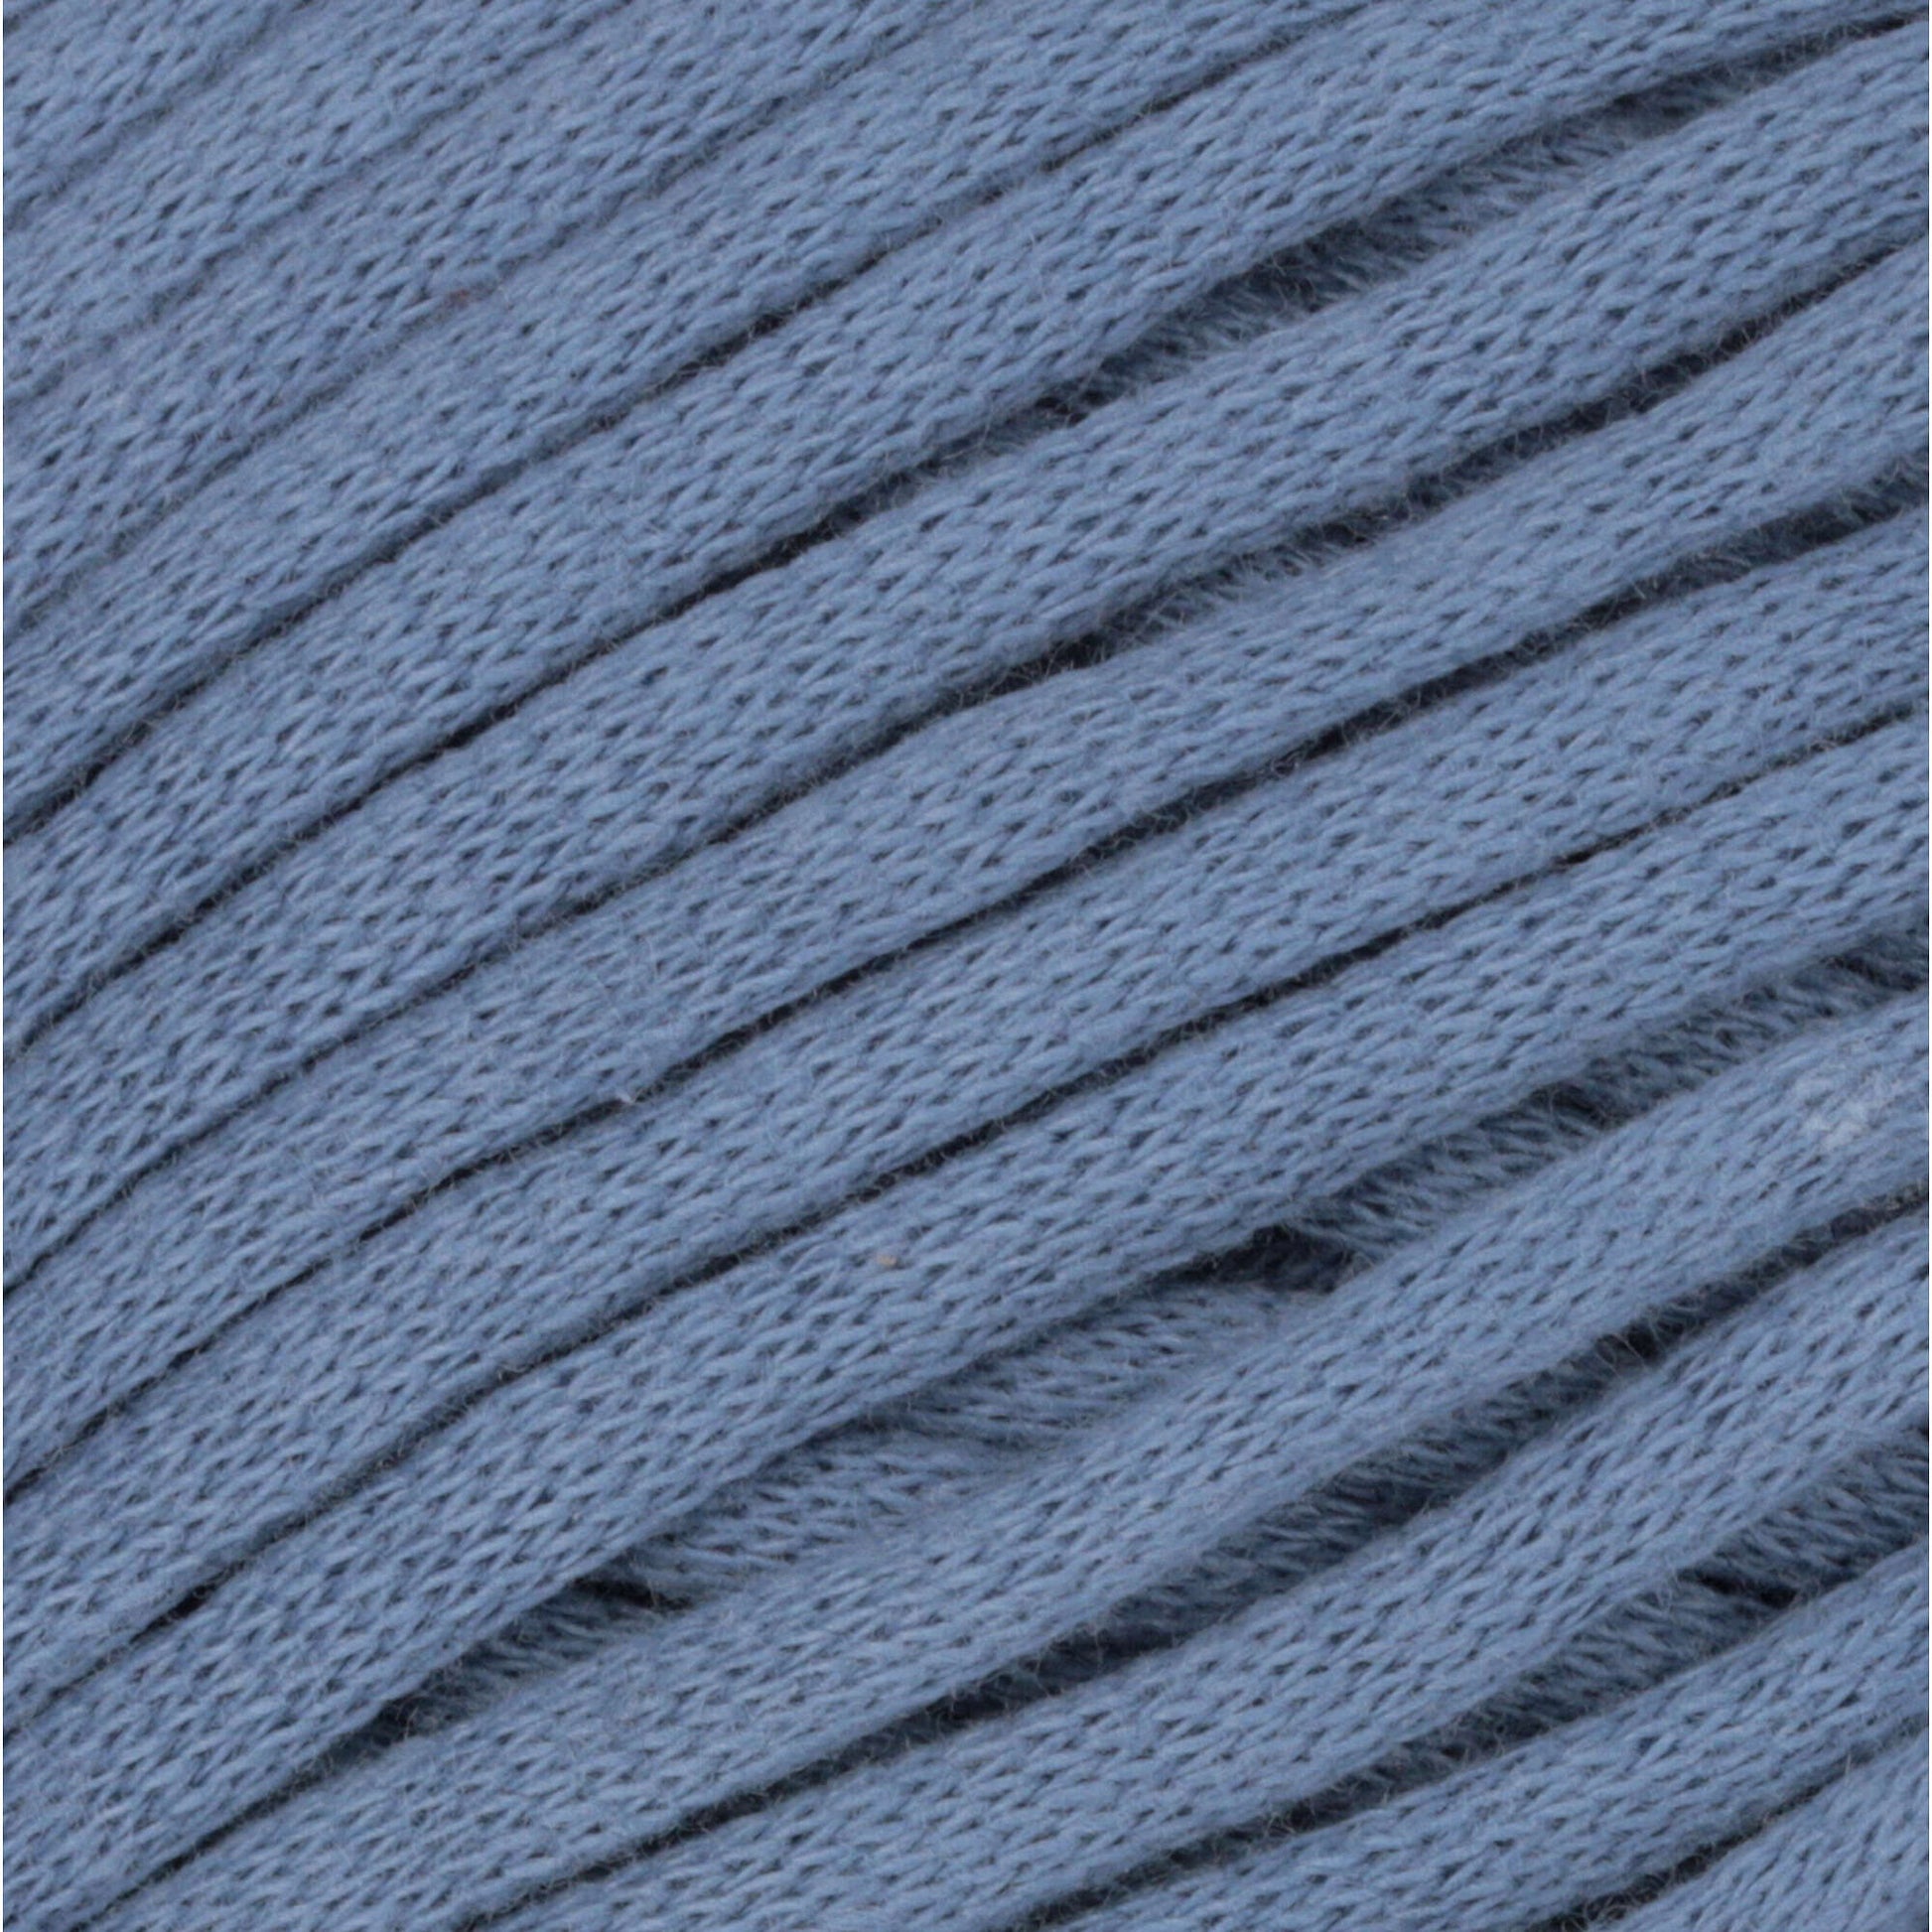 Bernat Maker Home Dec Yarn - Clearance Shades Steel Blue